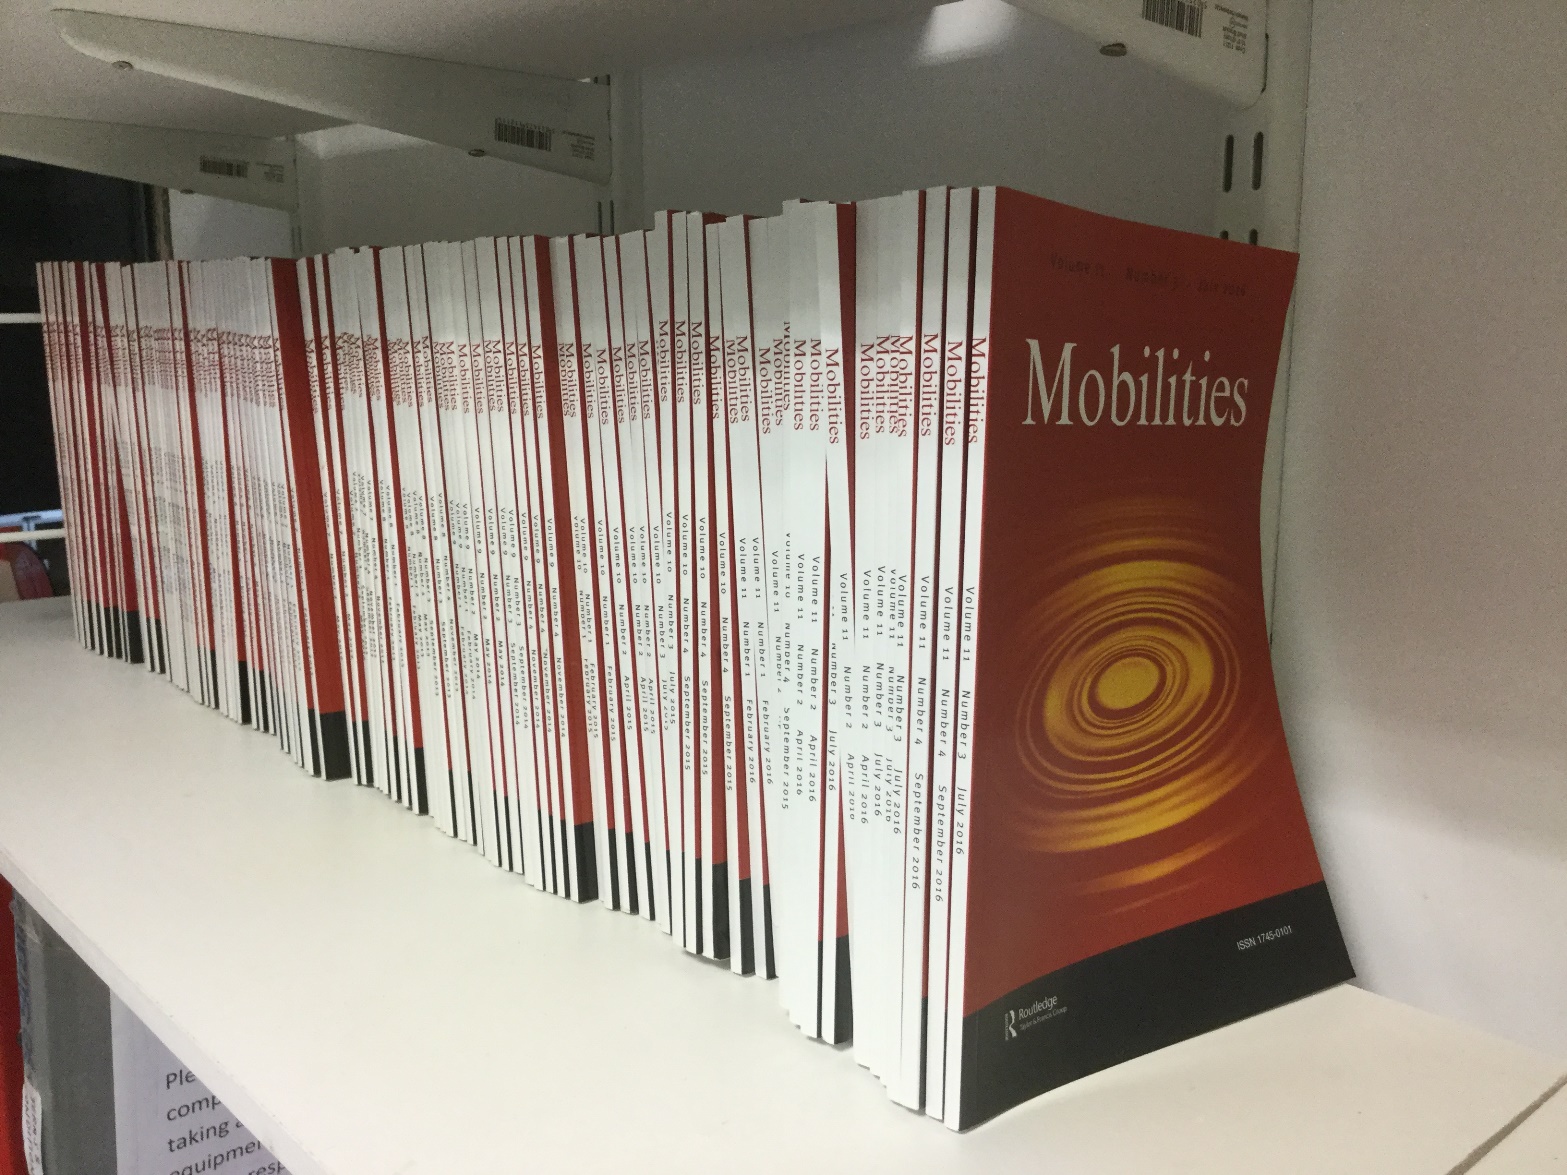 Mobilities journal on bookshelf